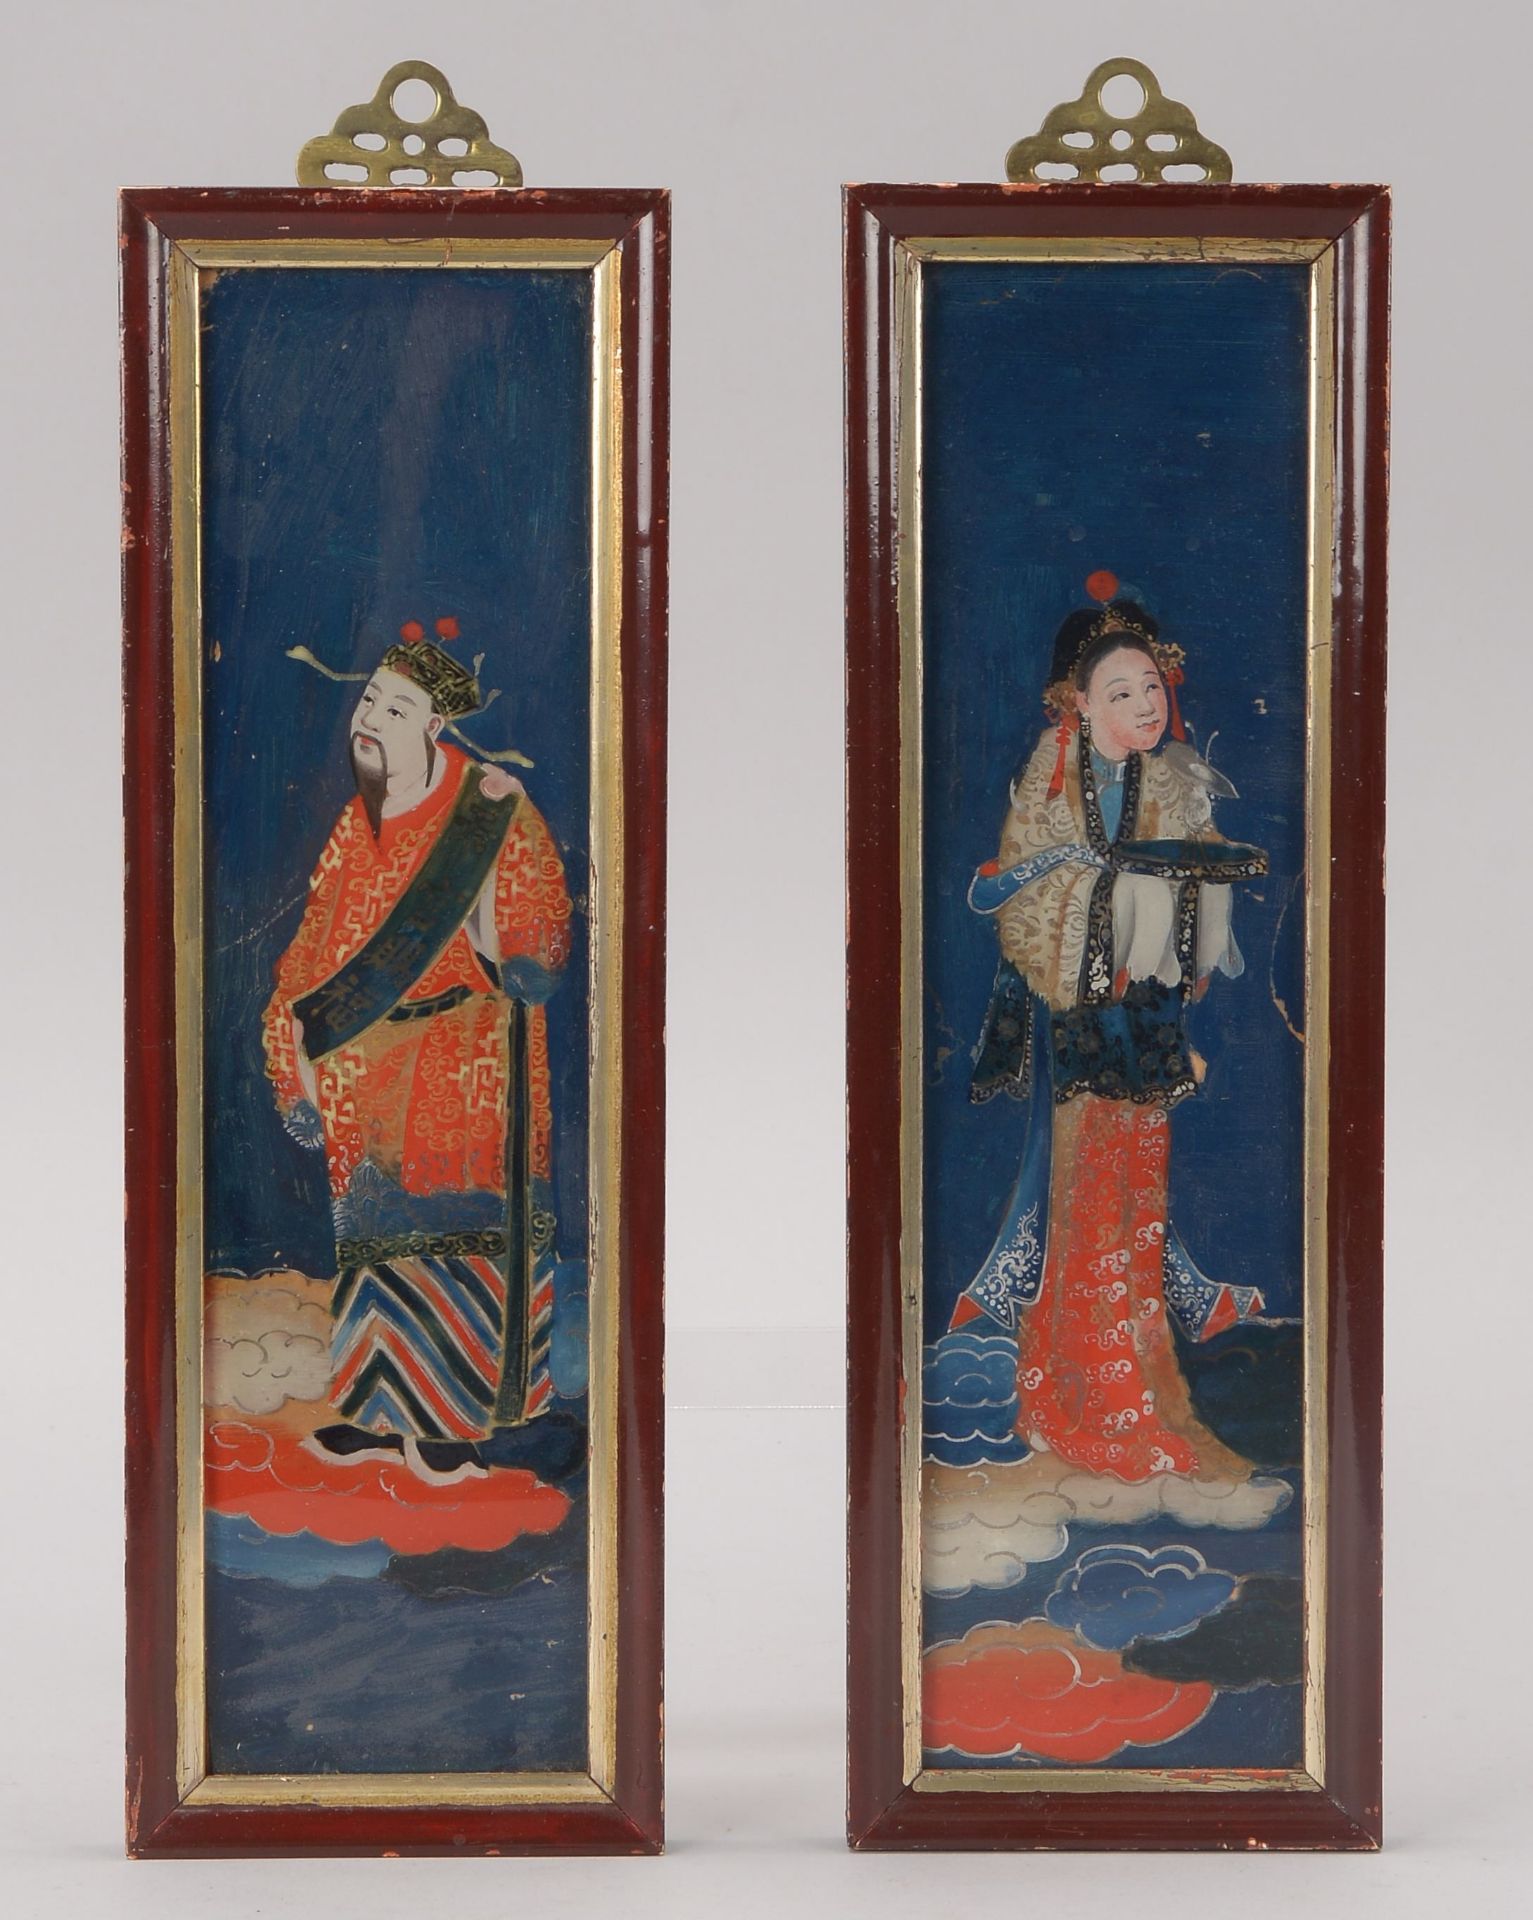 2 Hinterglasmalereien (China), Masse jeweils 28,5 x 8 cm, Rahmenmasse 30,5 x 9,8 cm